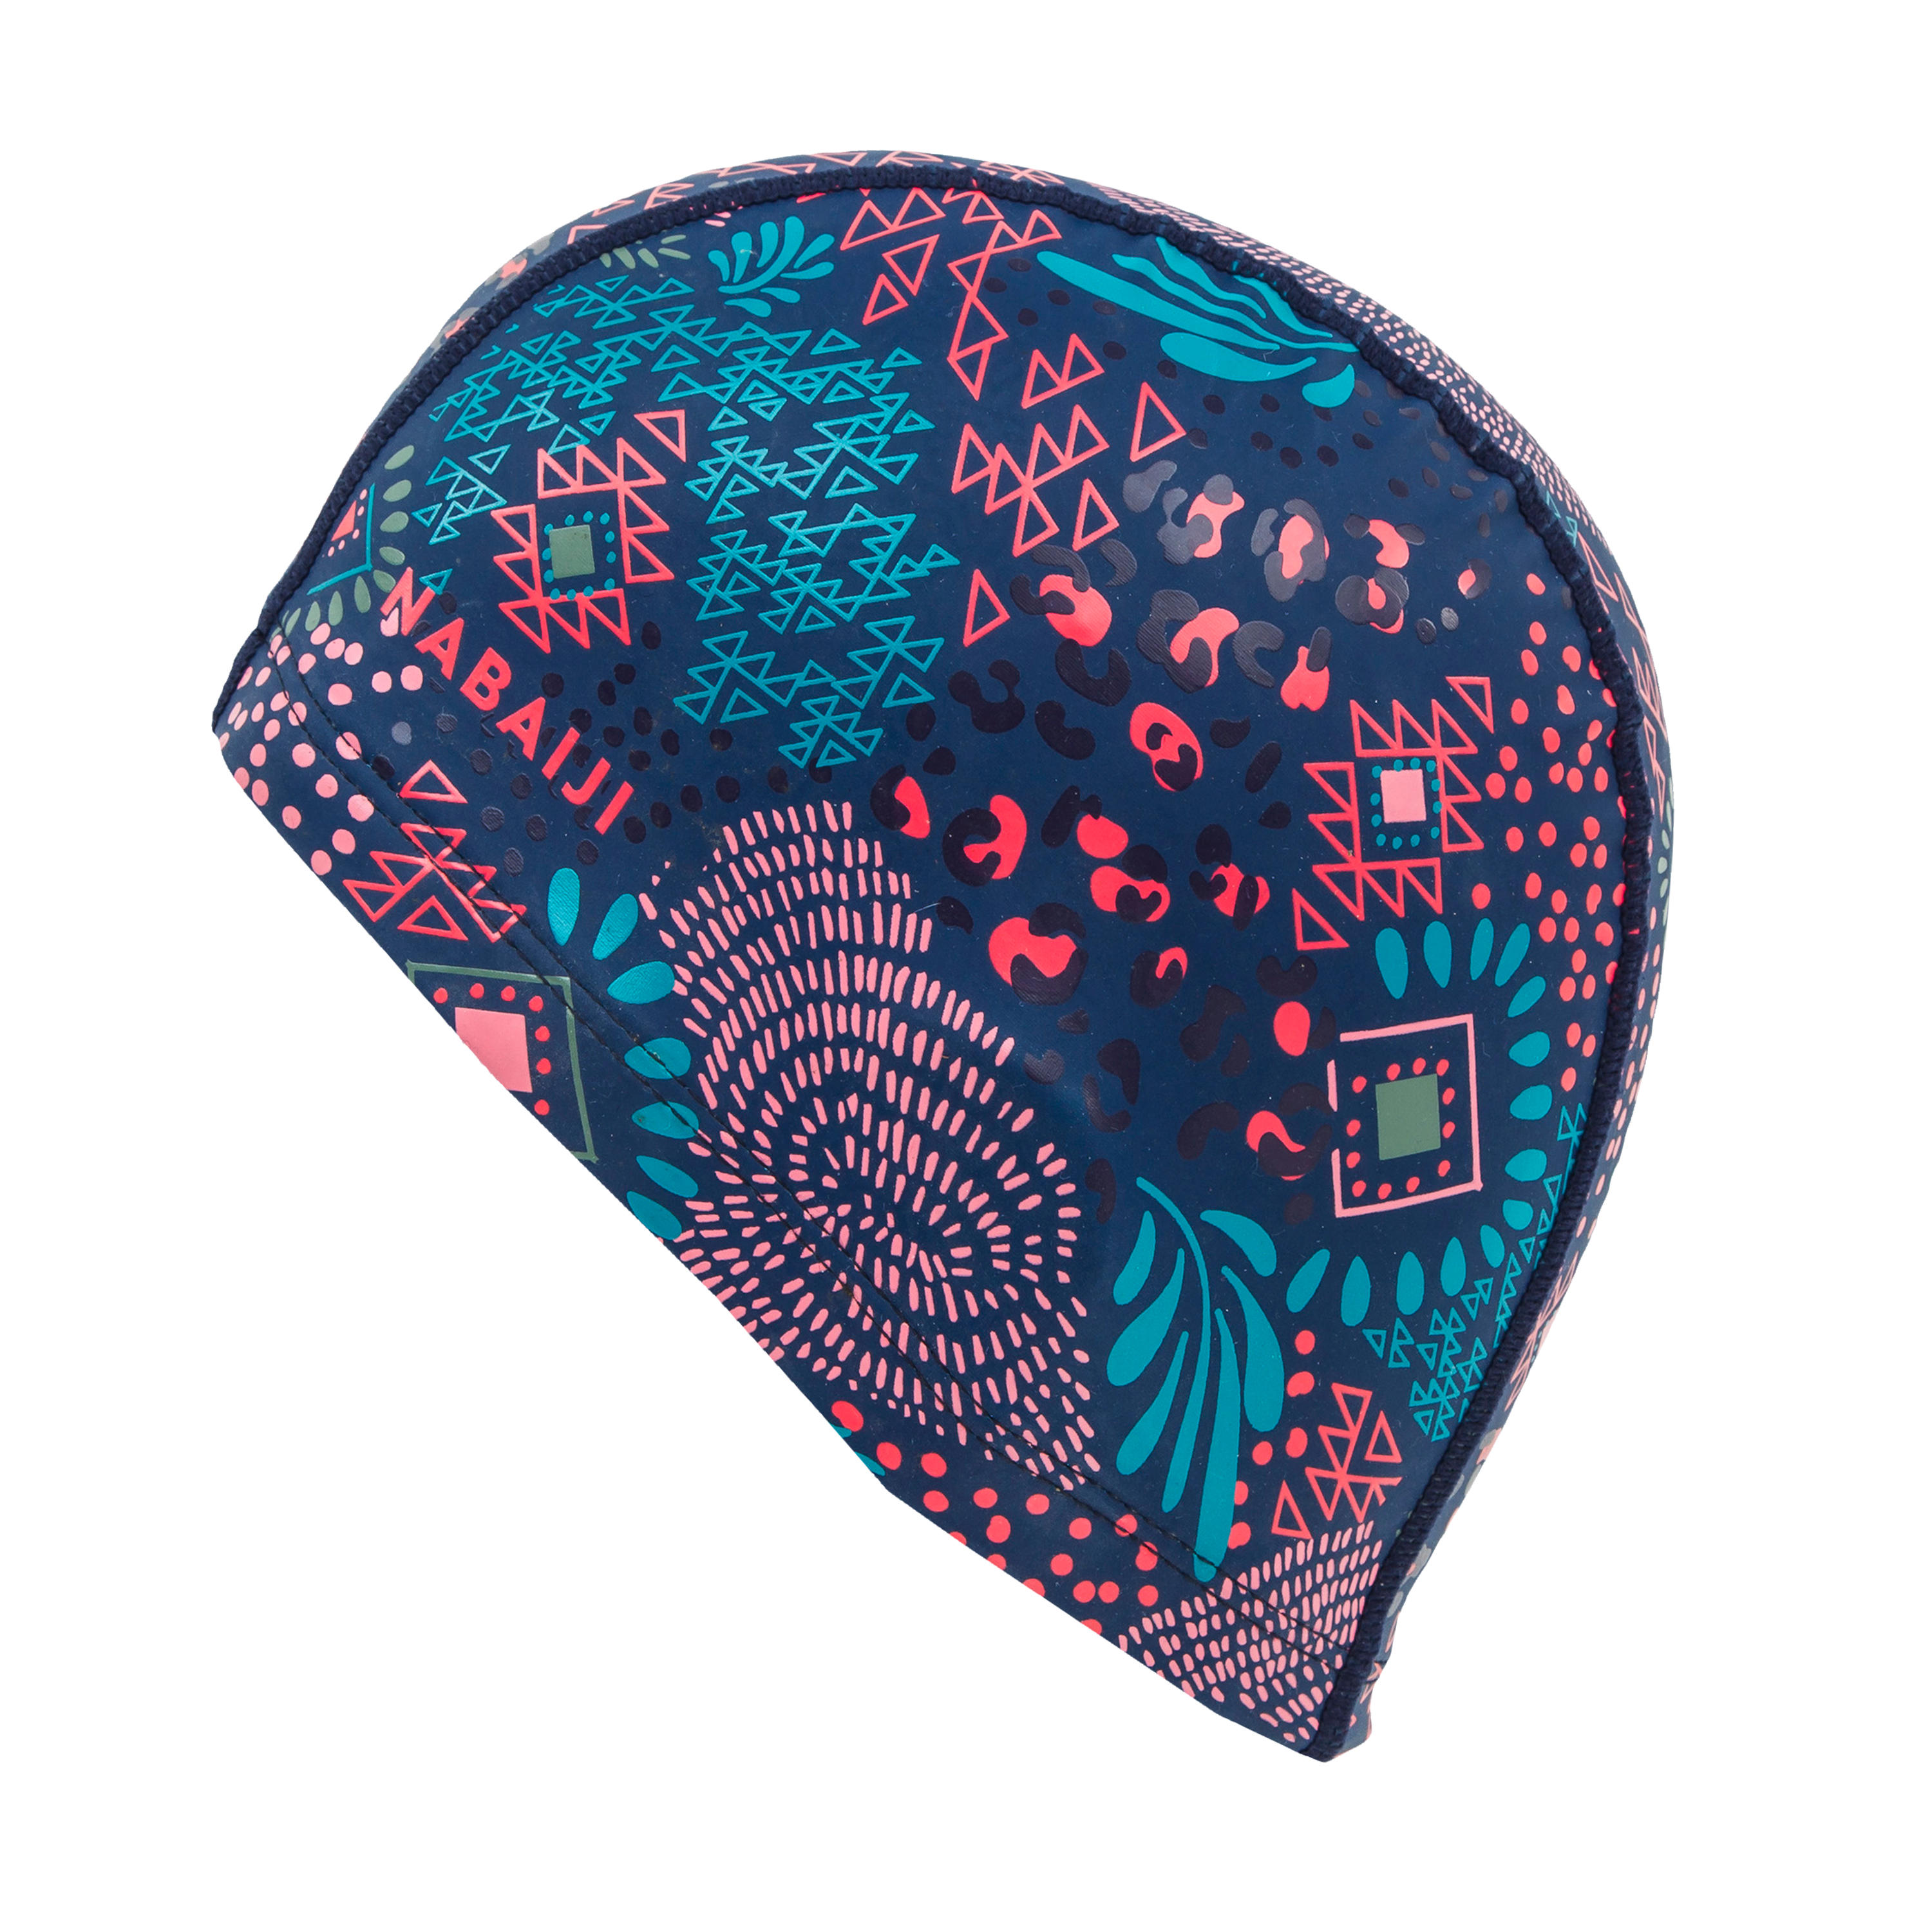 Coated mesh swim cap - Printed fabric - Size L - Canopa blue pink 3/5